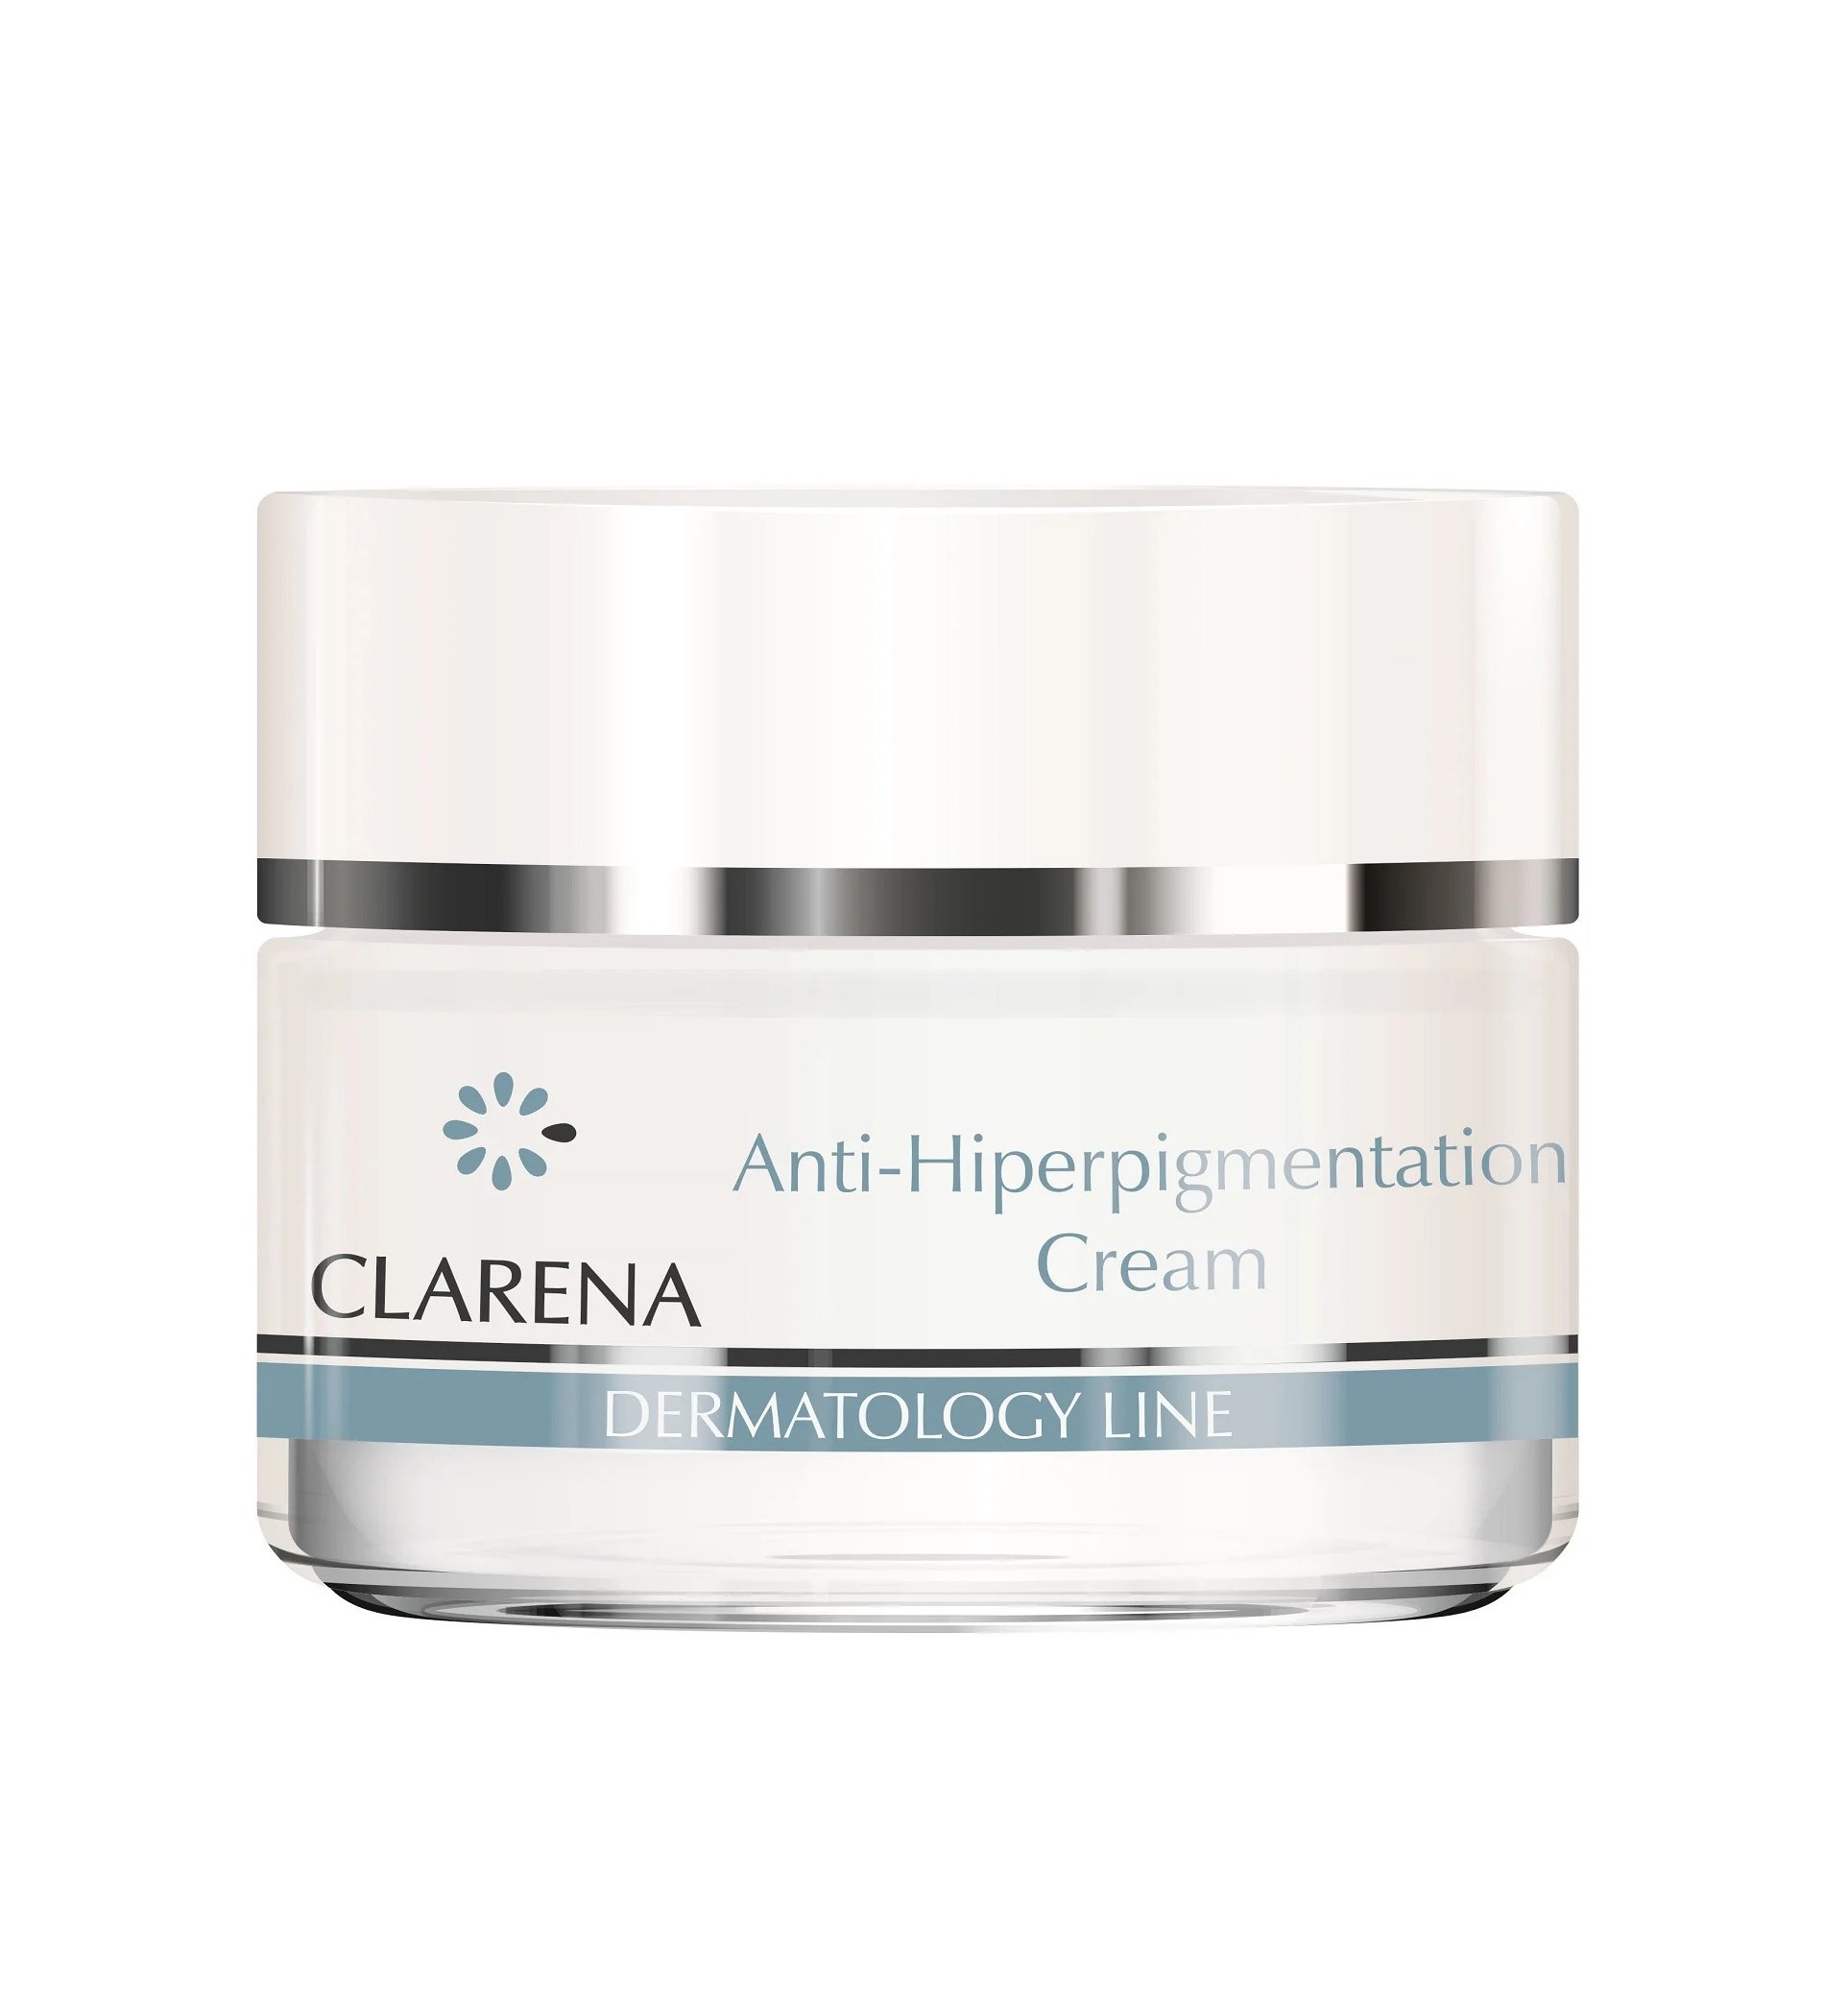 Clarena Dermatology Line Anti Hiperpigmentation Cream 50ml